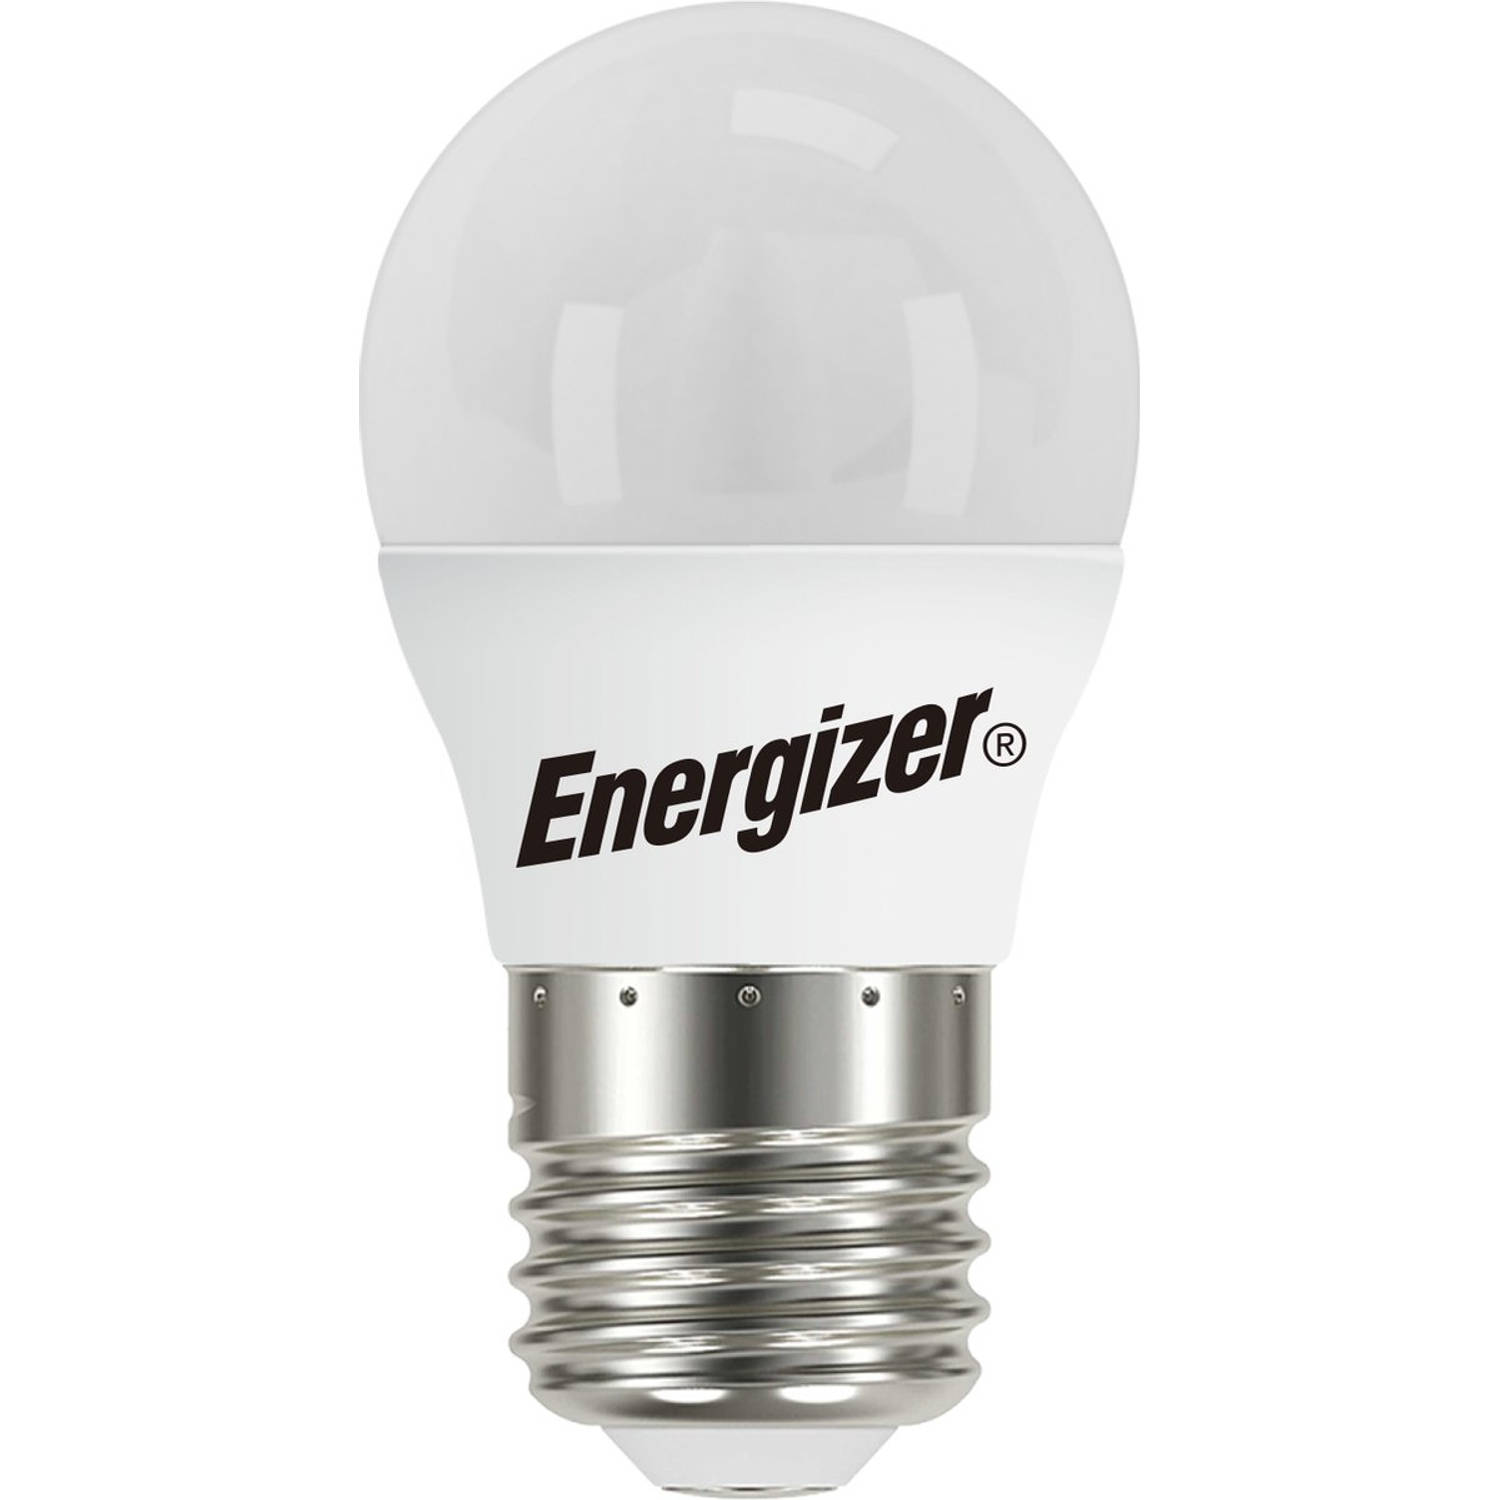 Energizer energiezuinige Led kogellamp - E27 - 2,9 Watt - warmwit licht - niet dimbaar - 5 stuks